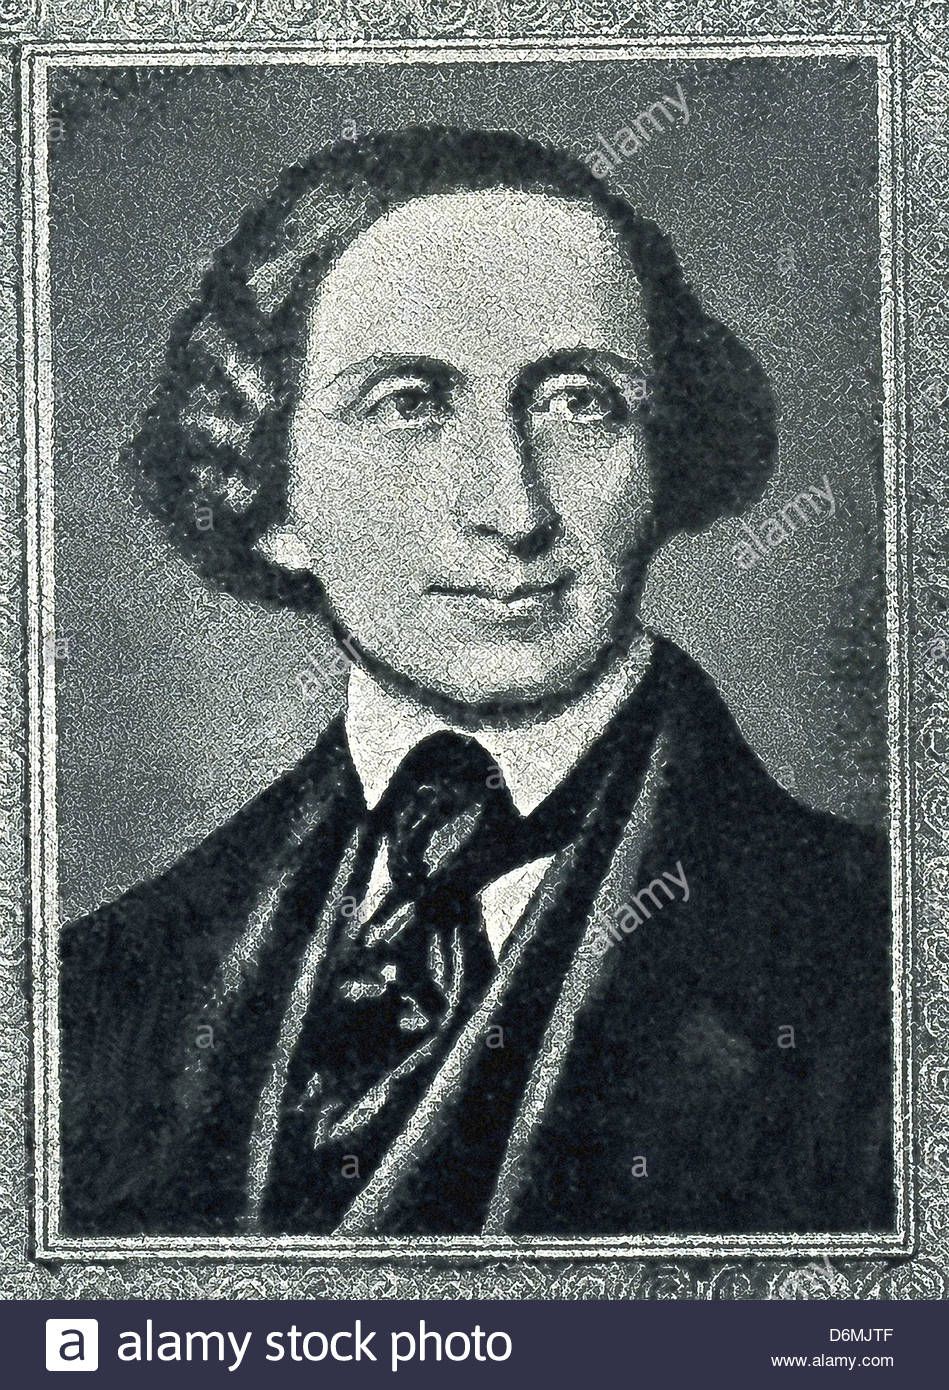 Pictures of Hans Christian Andersen